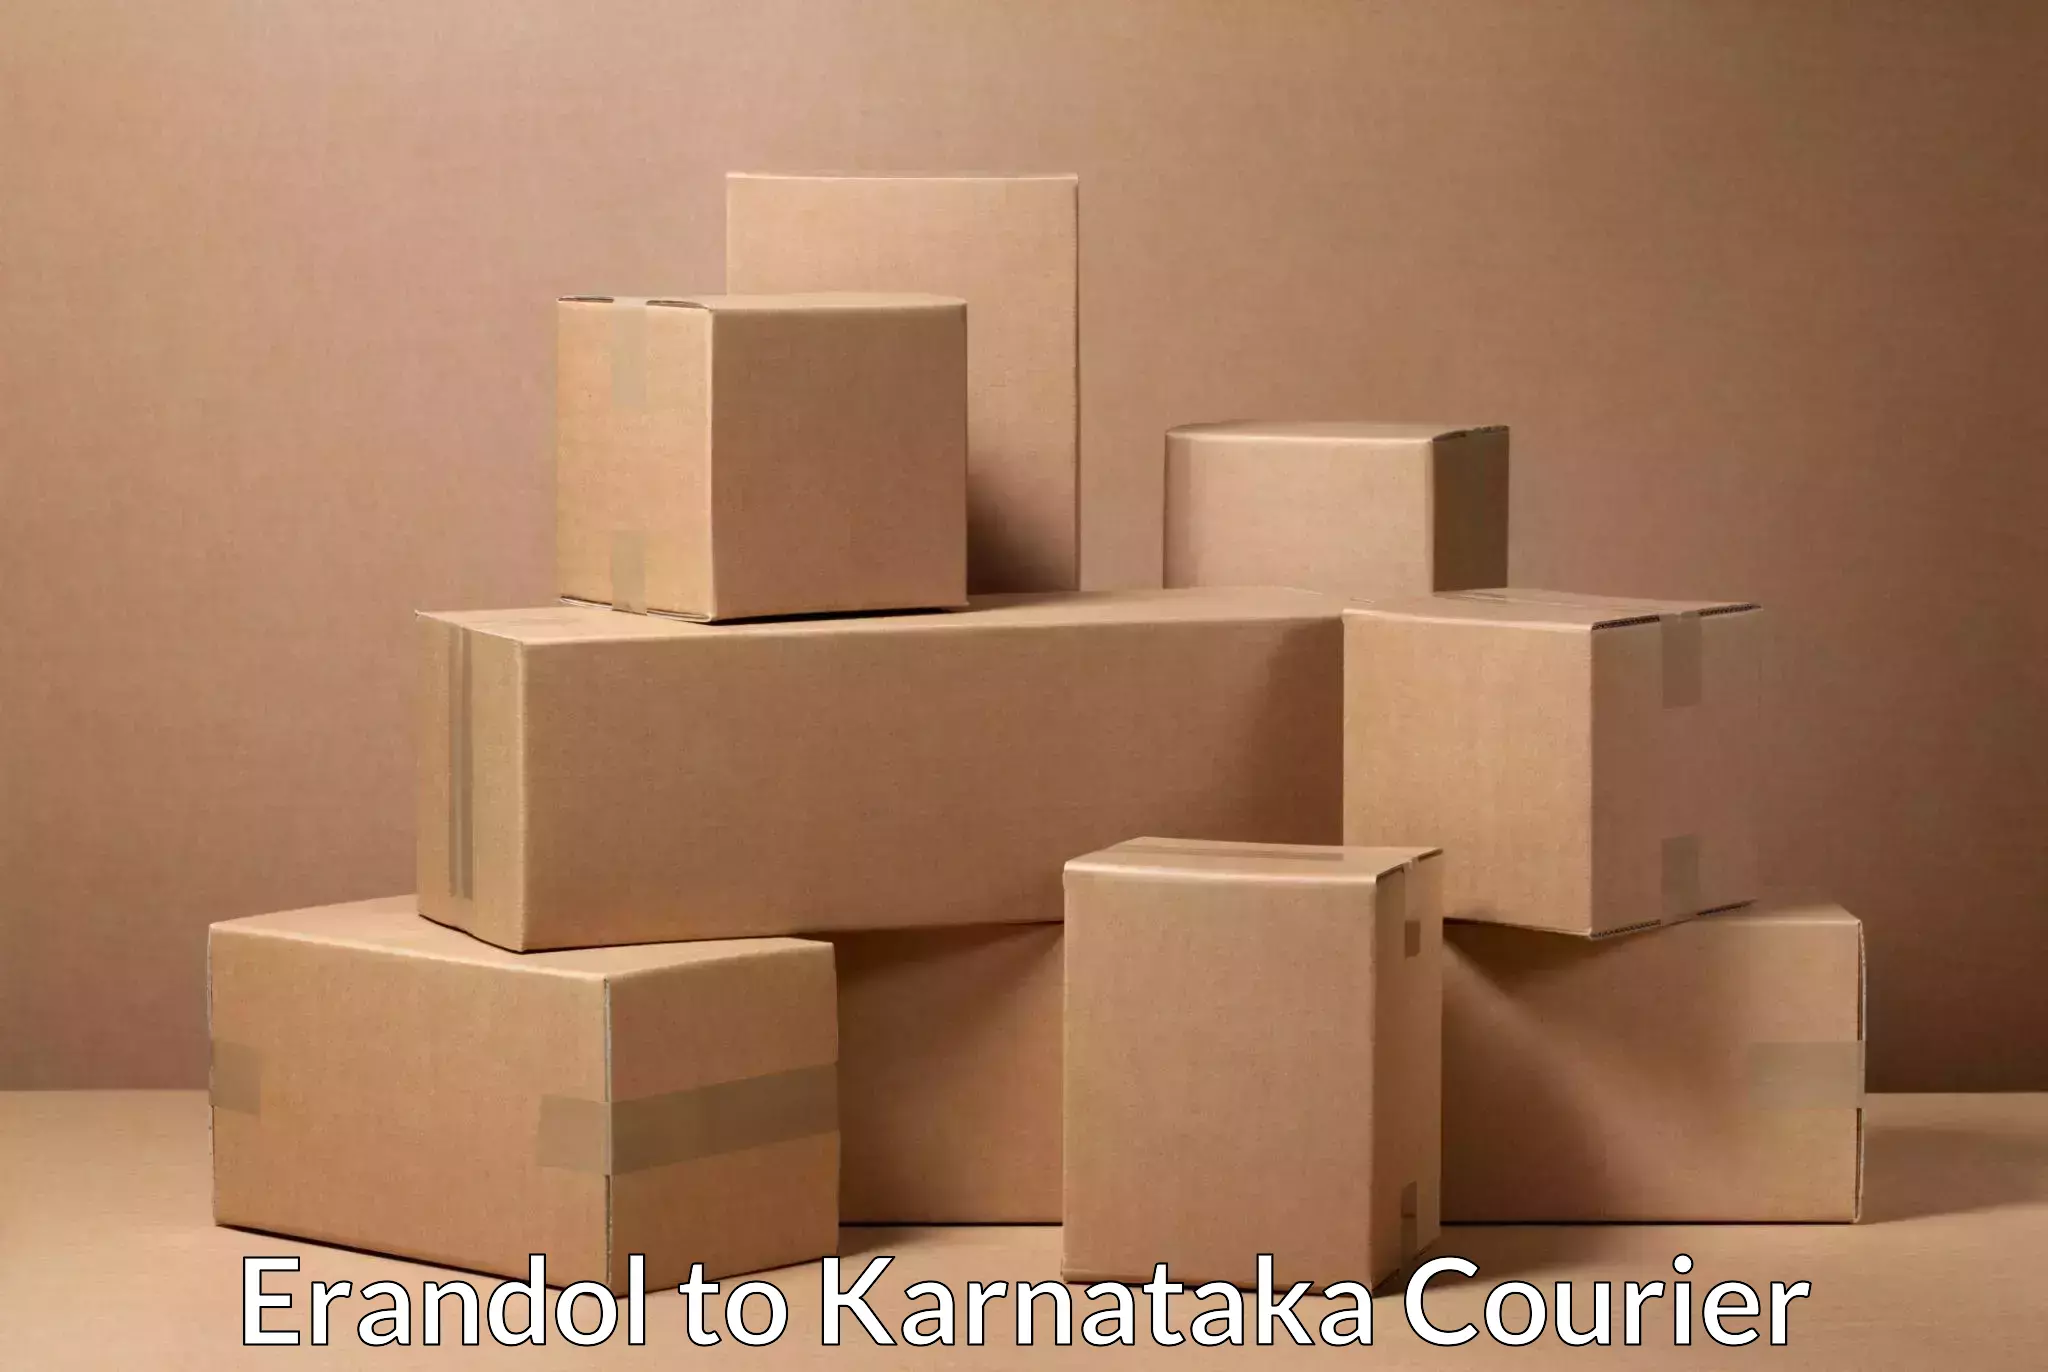 Seamless shipping experience Erandol to Karnataka